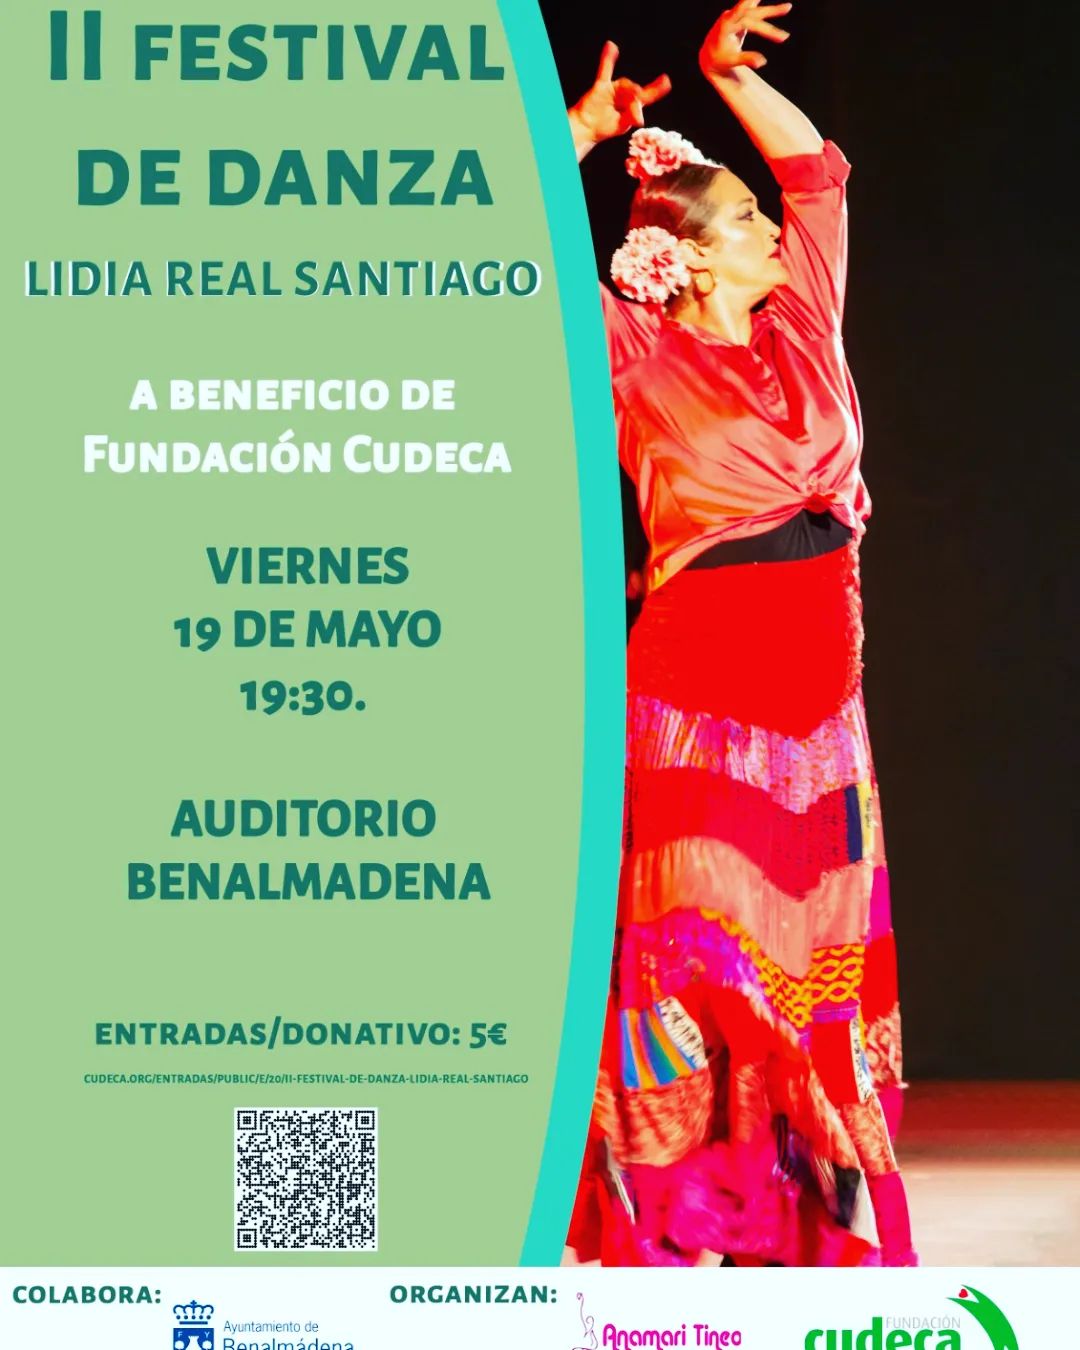 II Festival de danza Lidia Real Santiago a beneficio de Cudeca